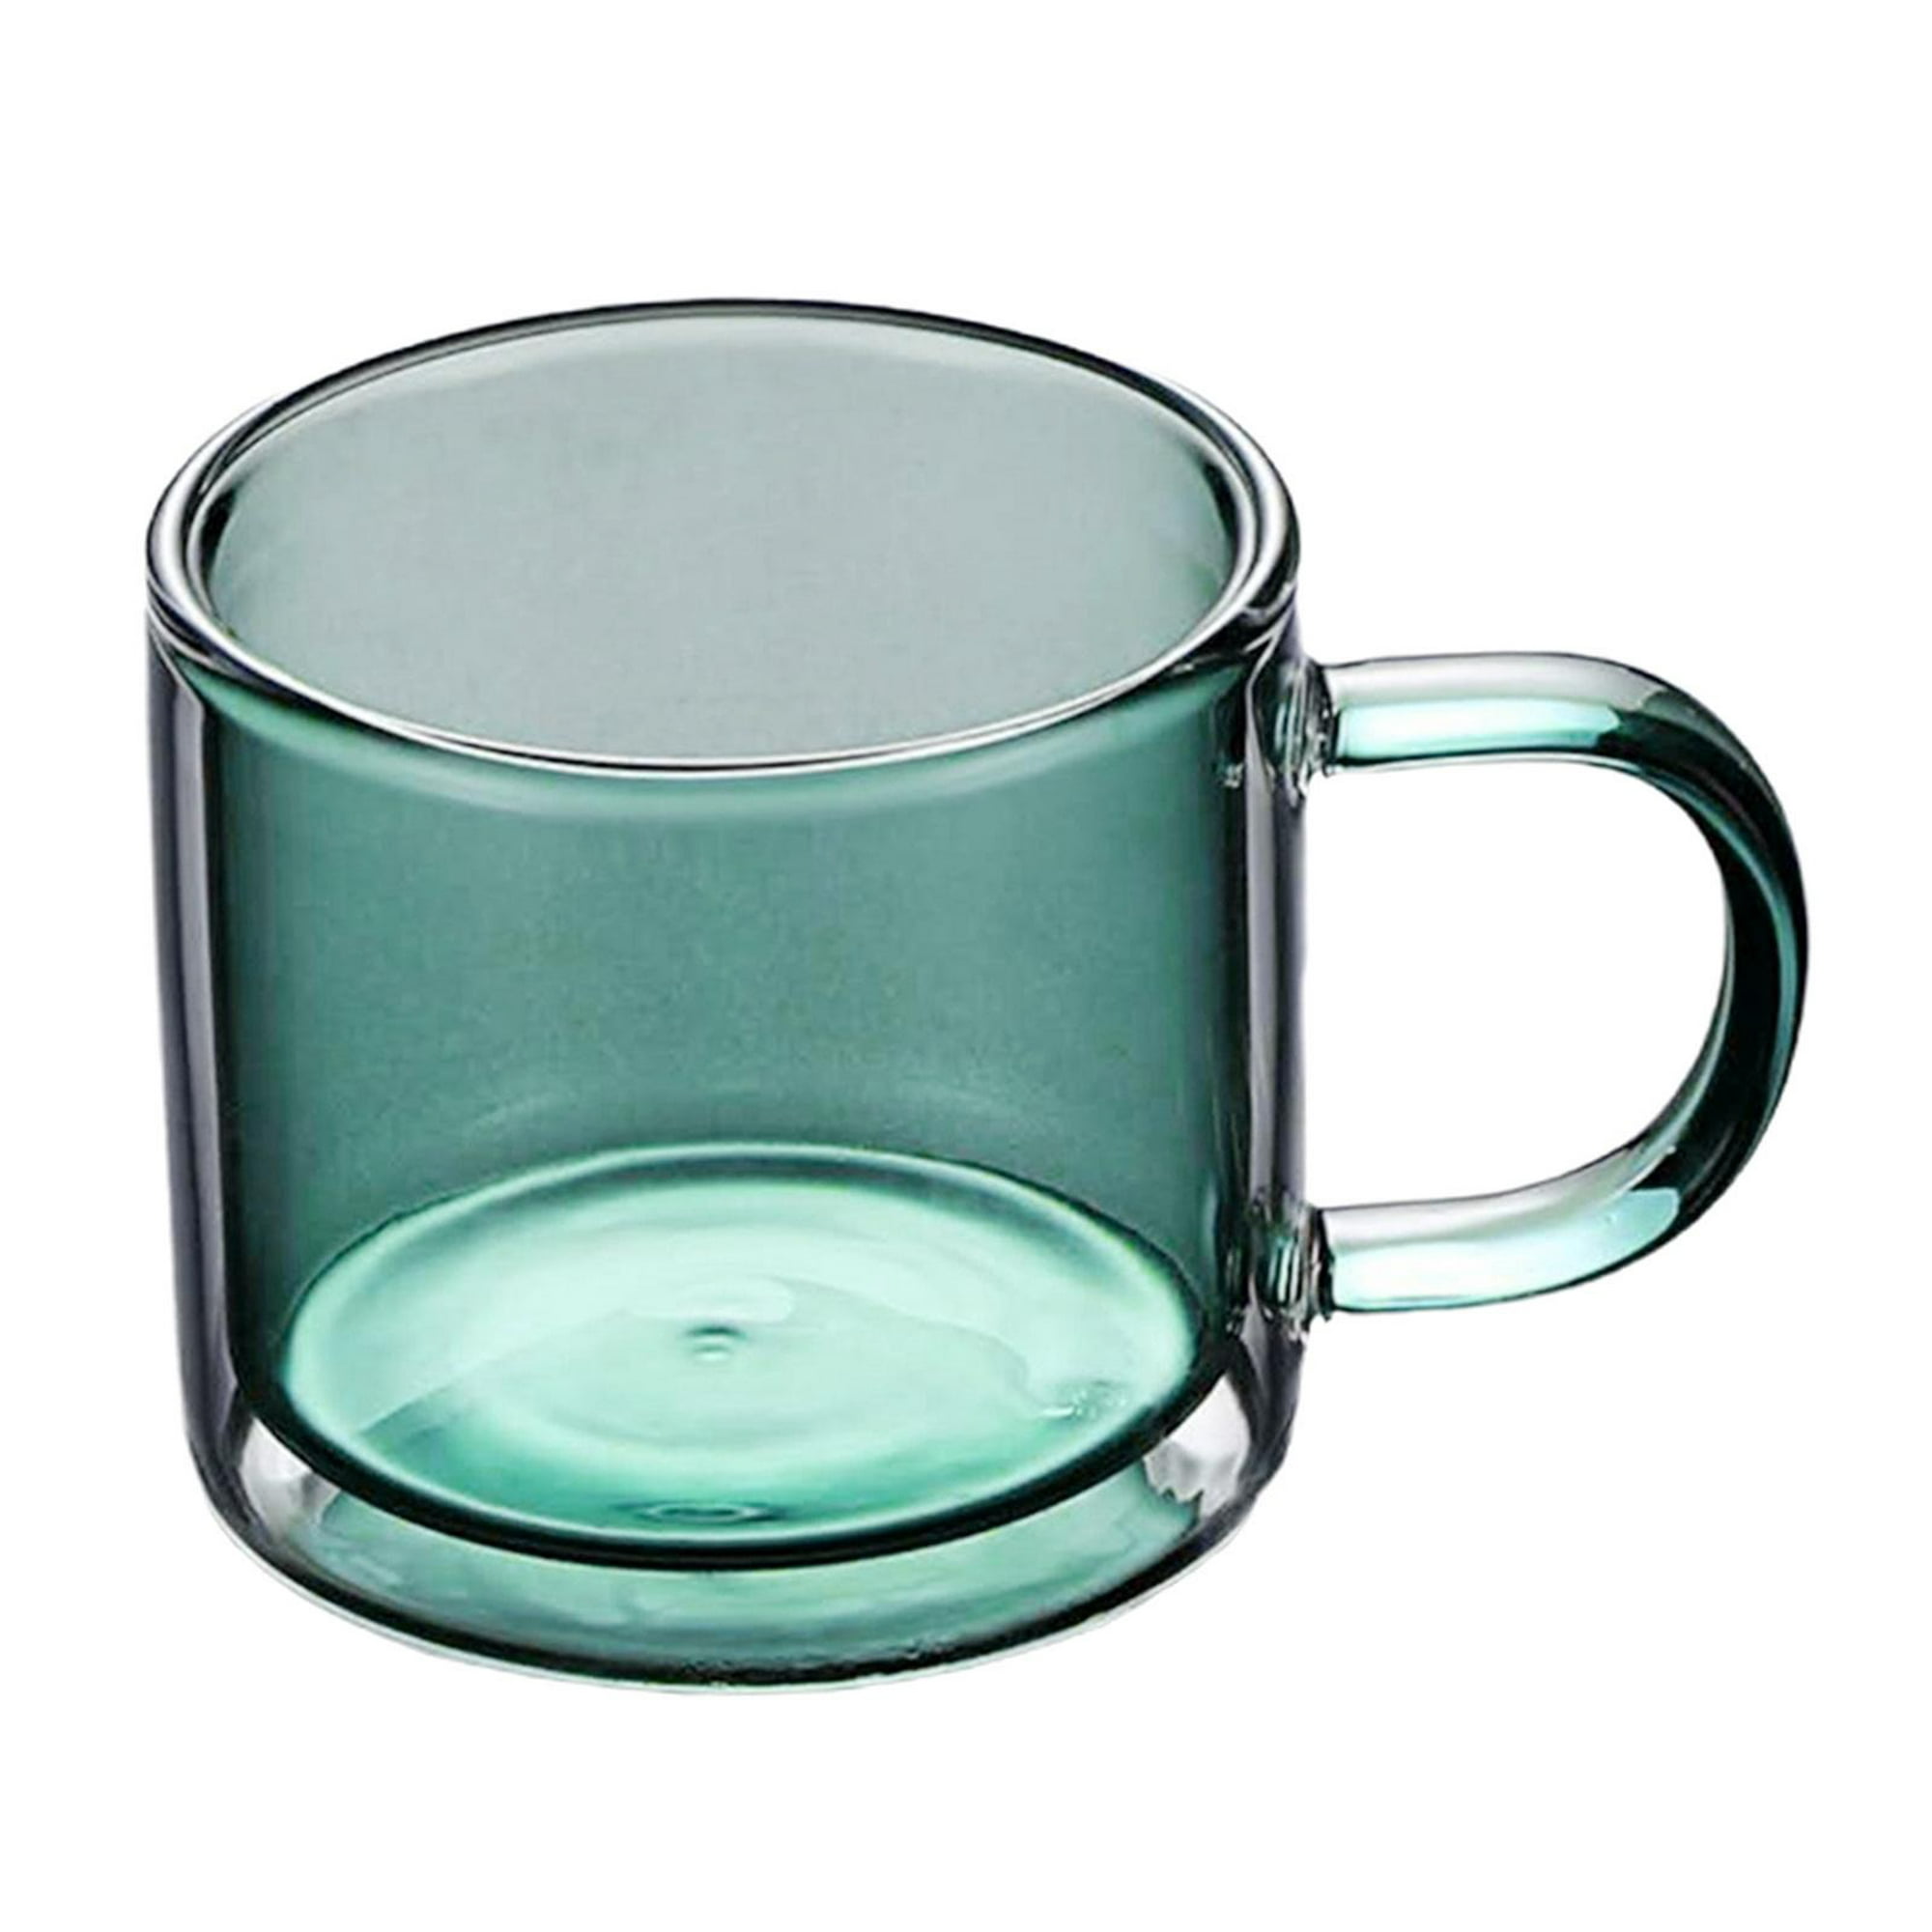  Tazas de café de vidrio de doble pared, tazas de espresso,  vasos para café y té, tazas de vidrio aisladas con mango grande, tazas  transparentes cada una de 6.8 fl oz